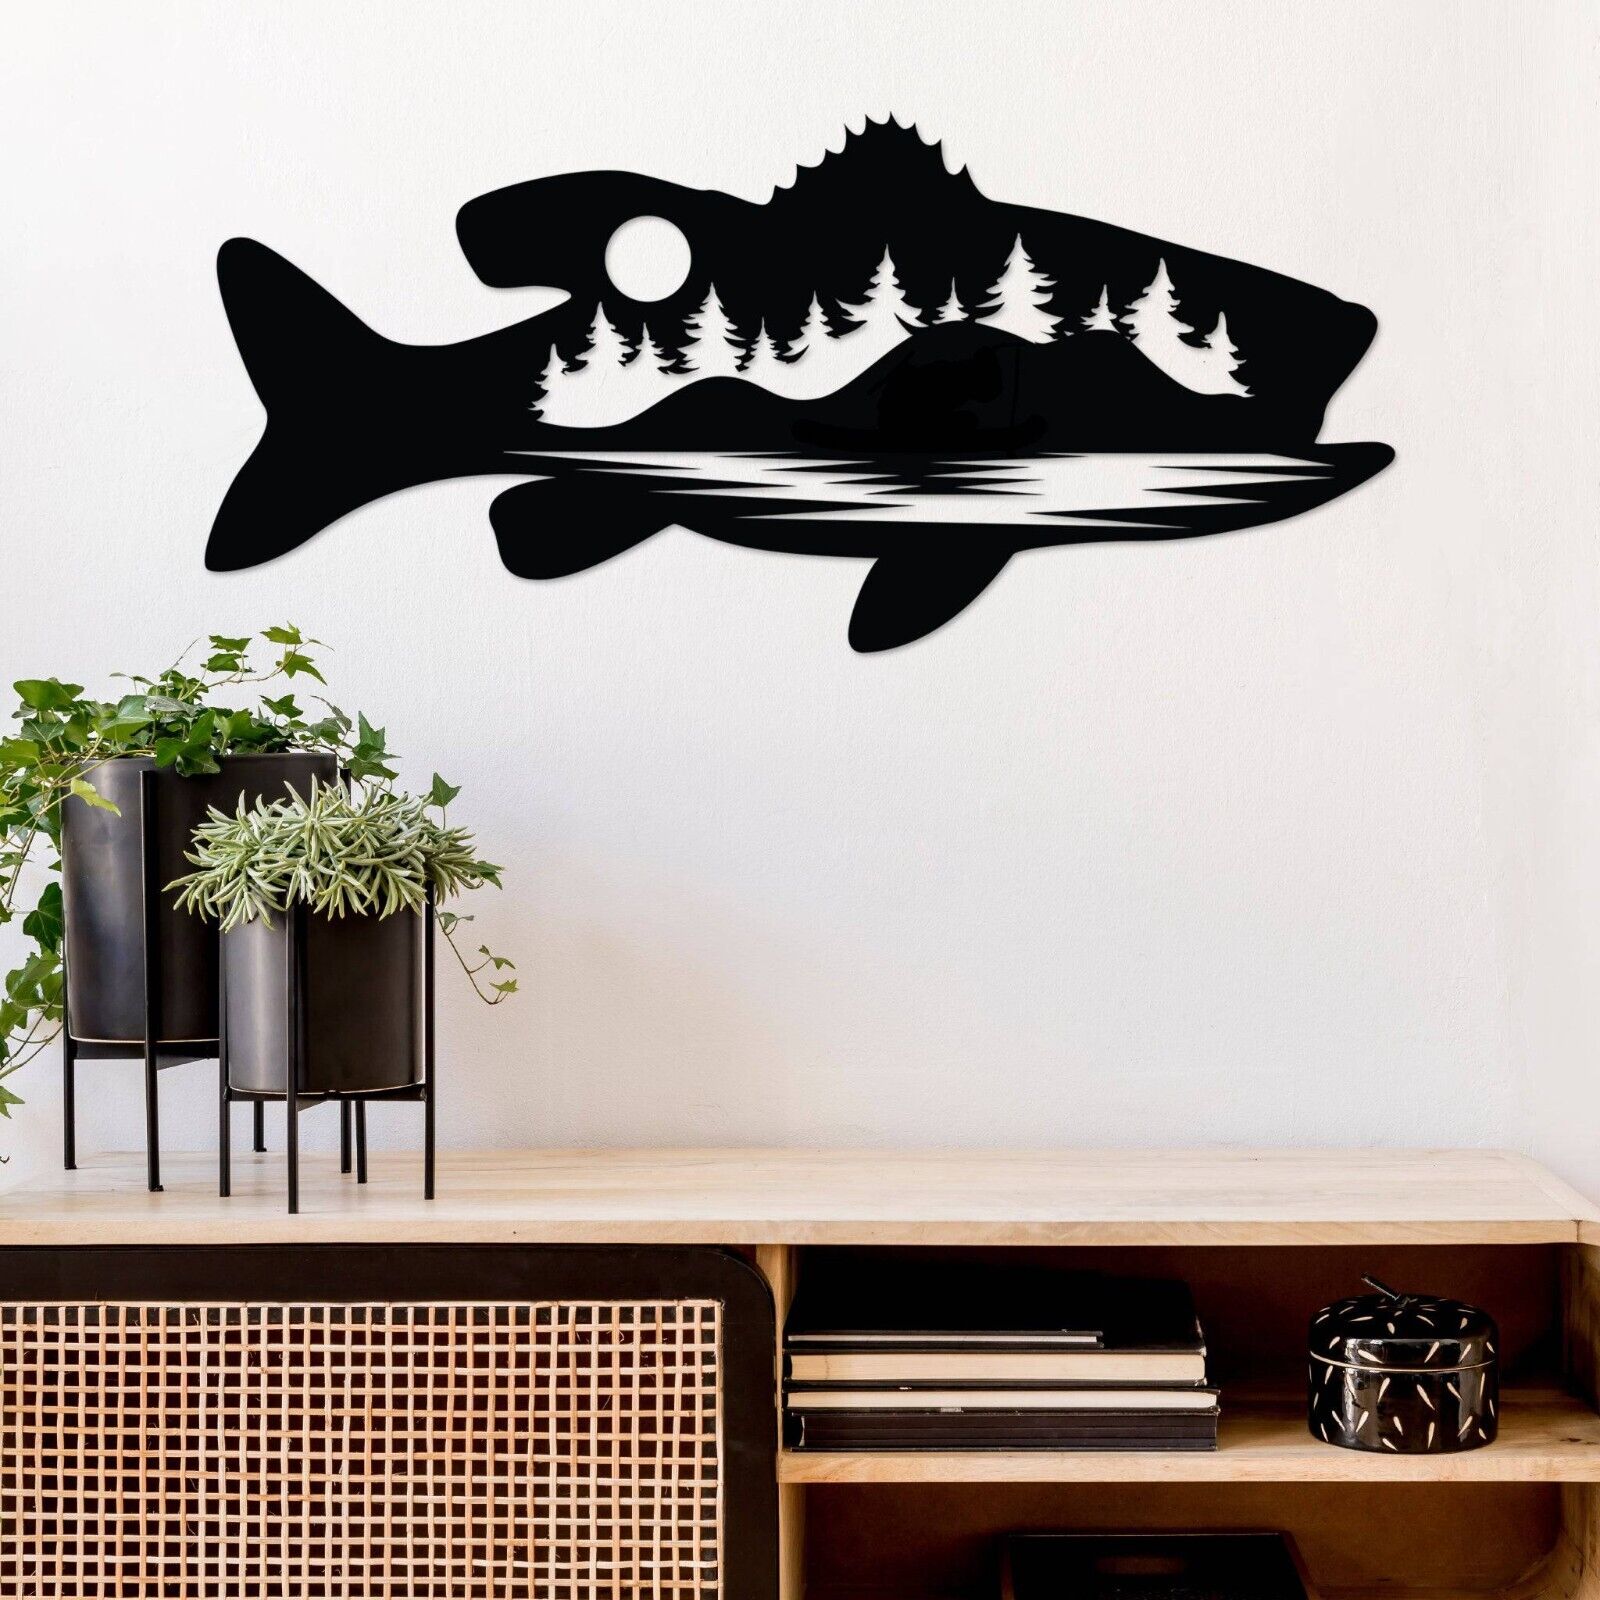 Wall Art Home Decor Metal Acrylic 3D Silhouette Poster USA Bass Fish Design Alte